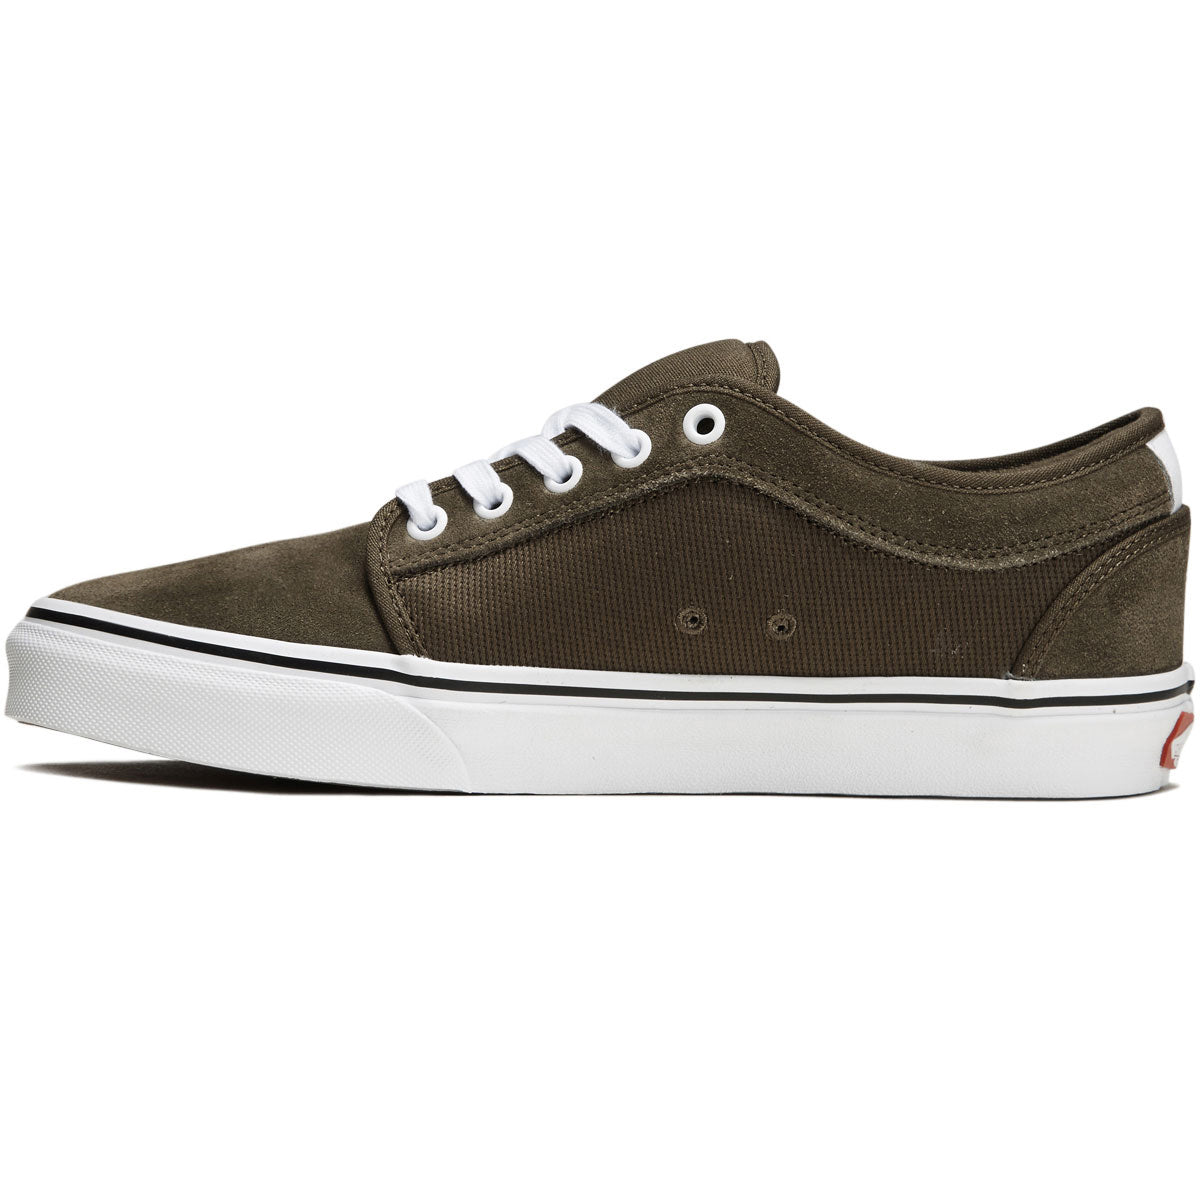 Vans Skate Chukka Low Shoes - Dark Olive/White image 2